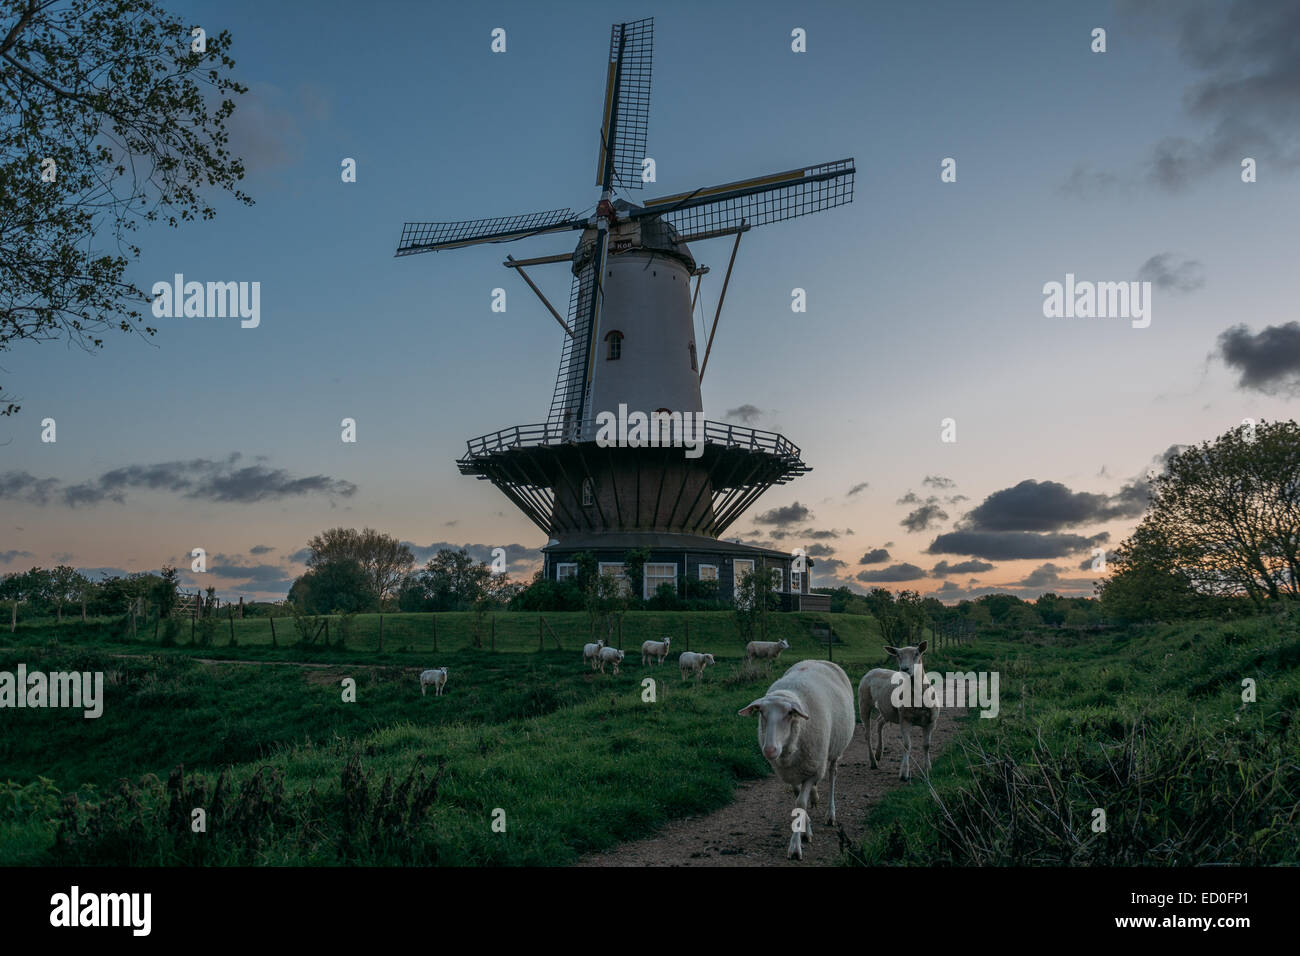 Netherlands, Zeeland, Veere, Windmill and grazing sheep at dusk Stock Photo